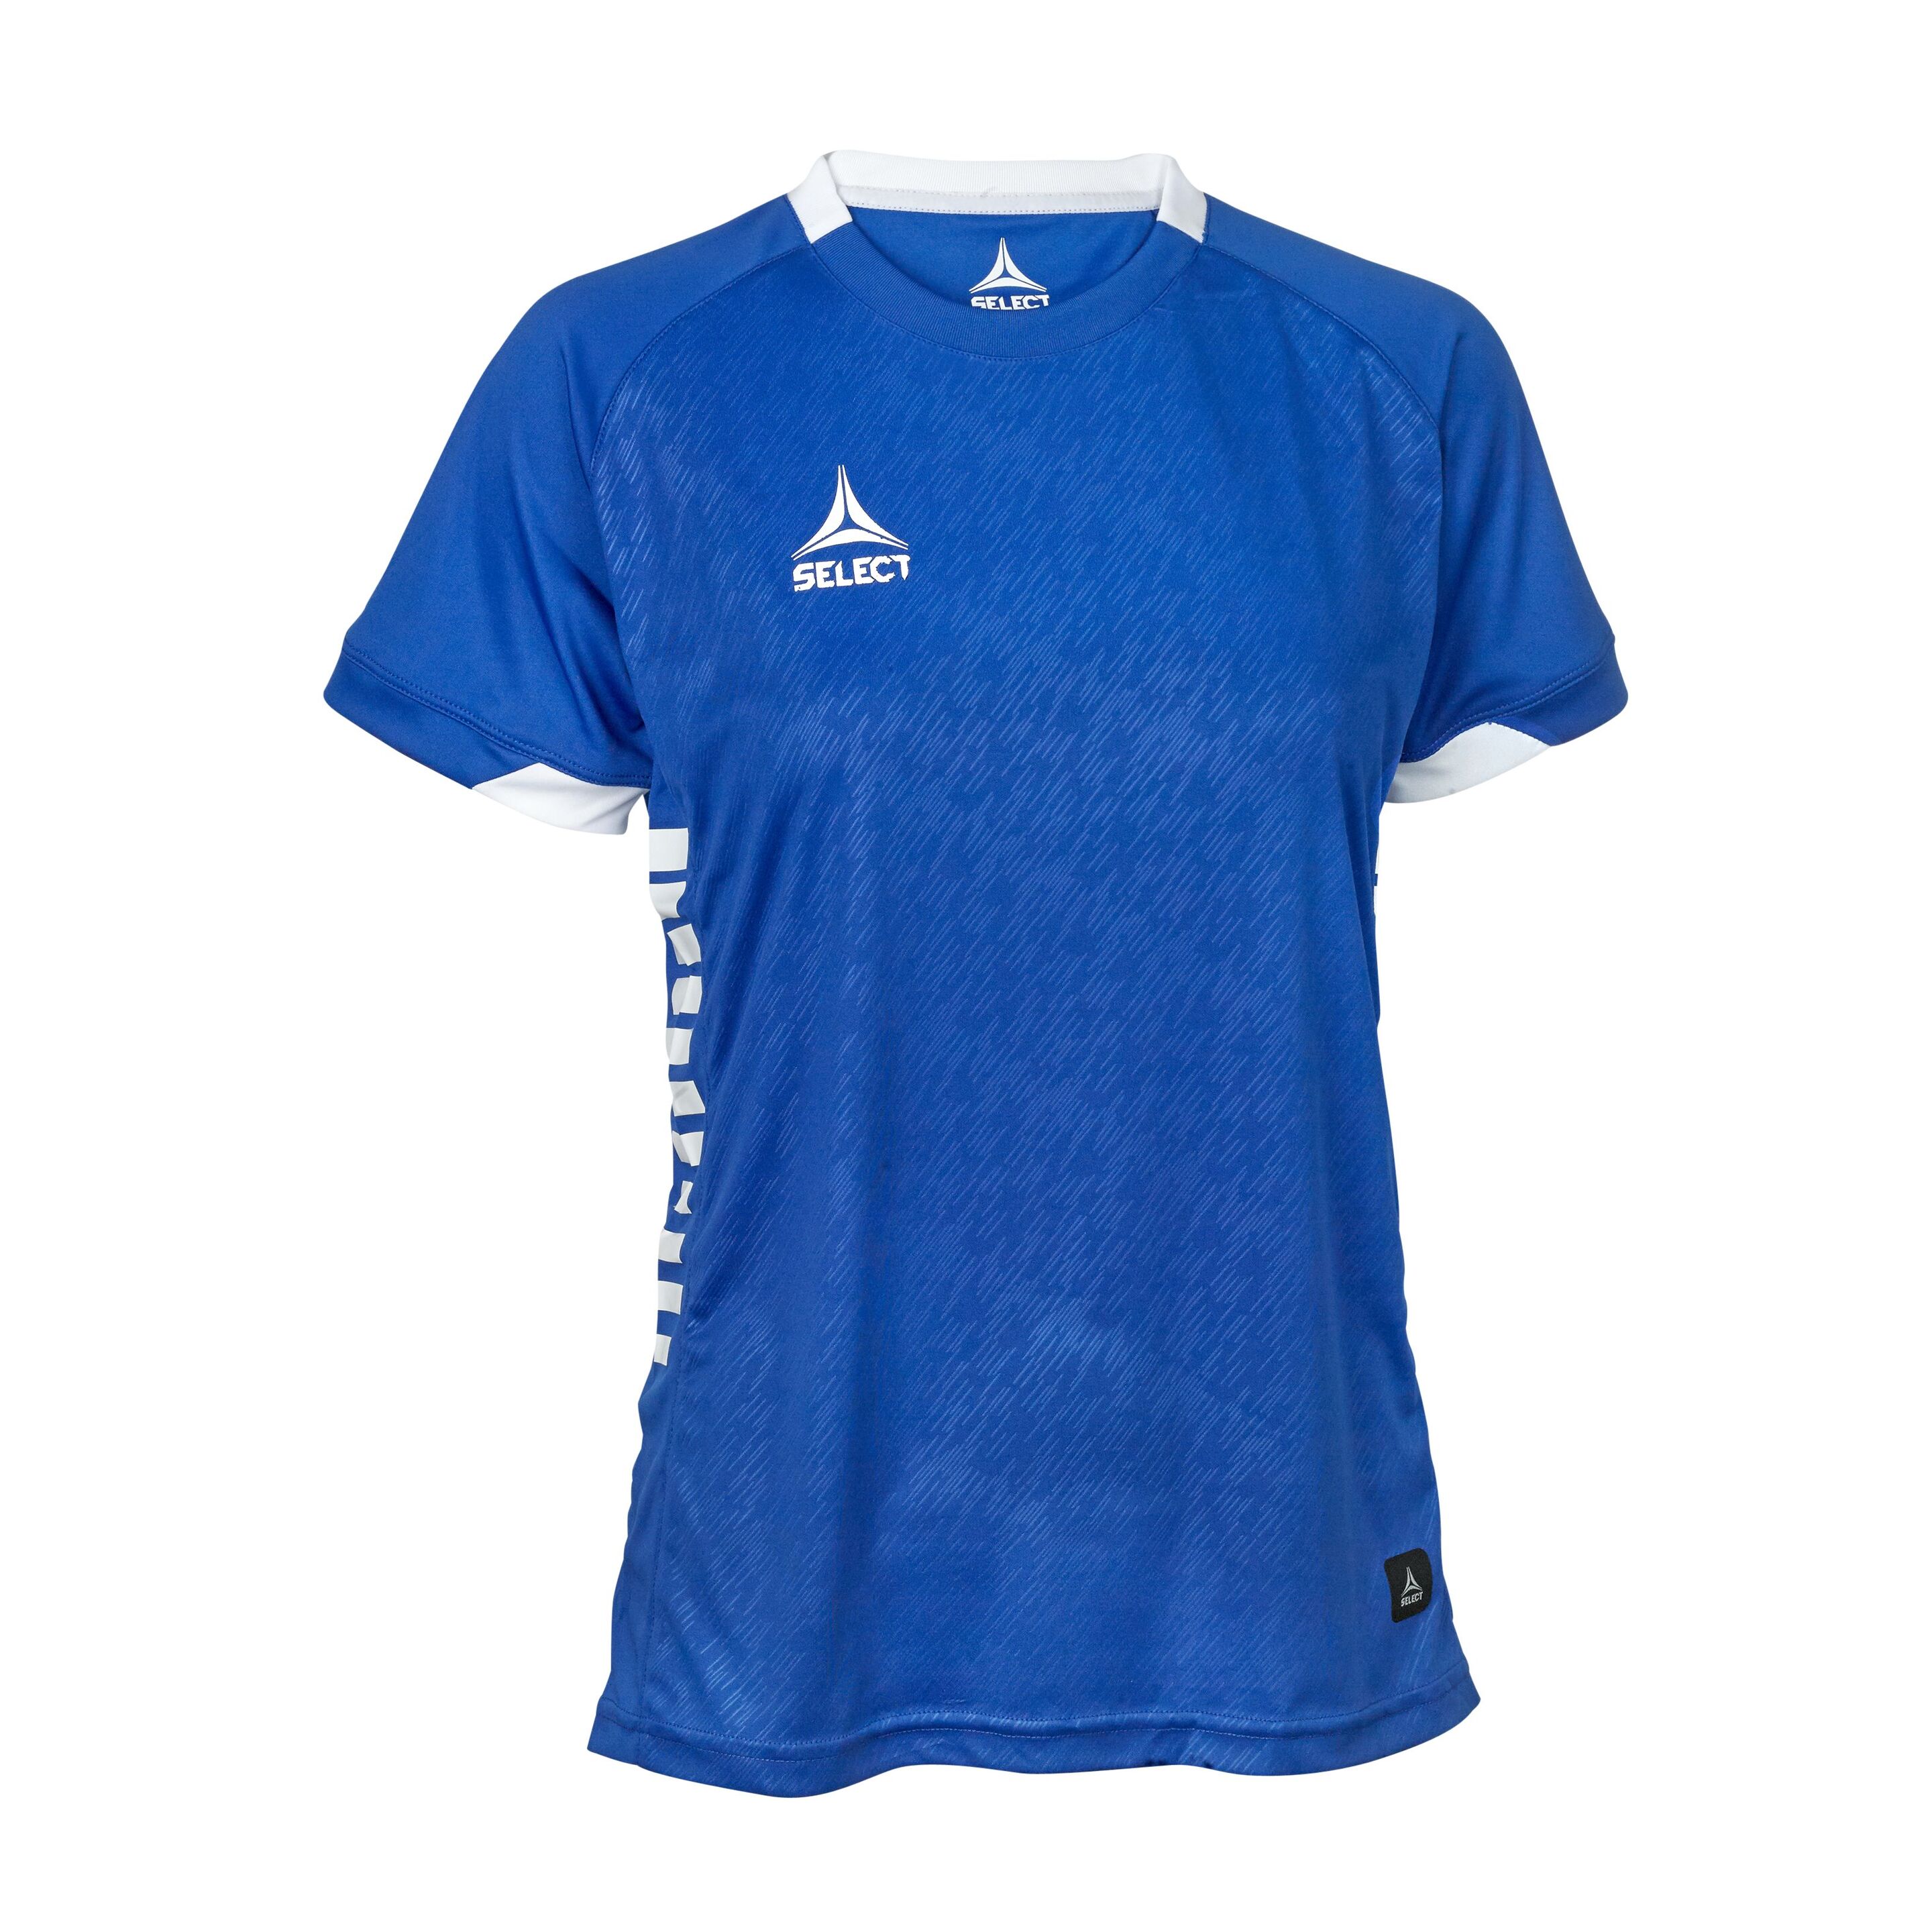 Camiseta Select Spain - azul - 